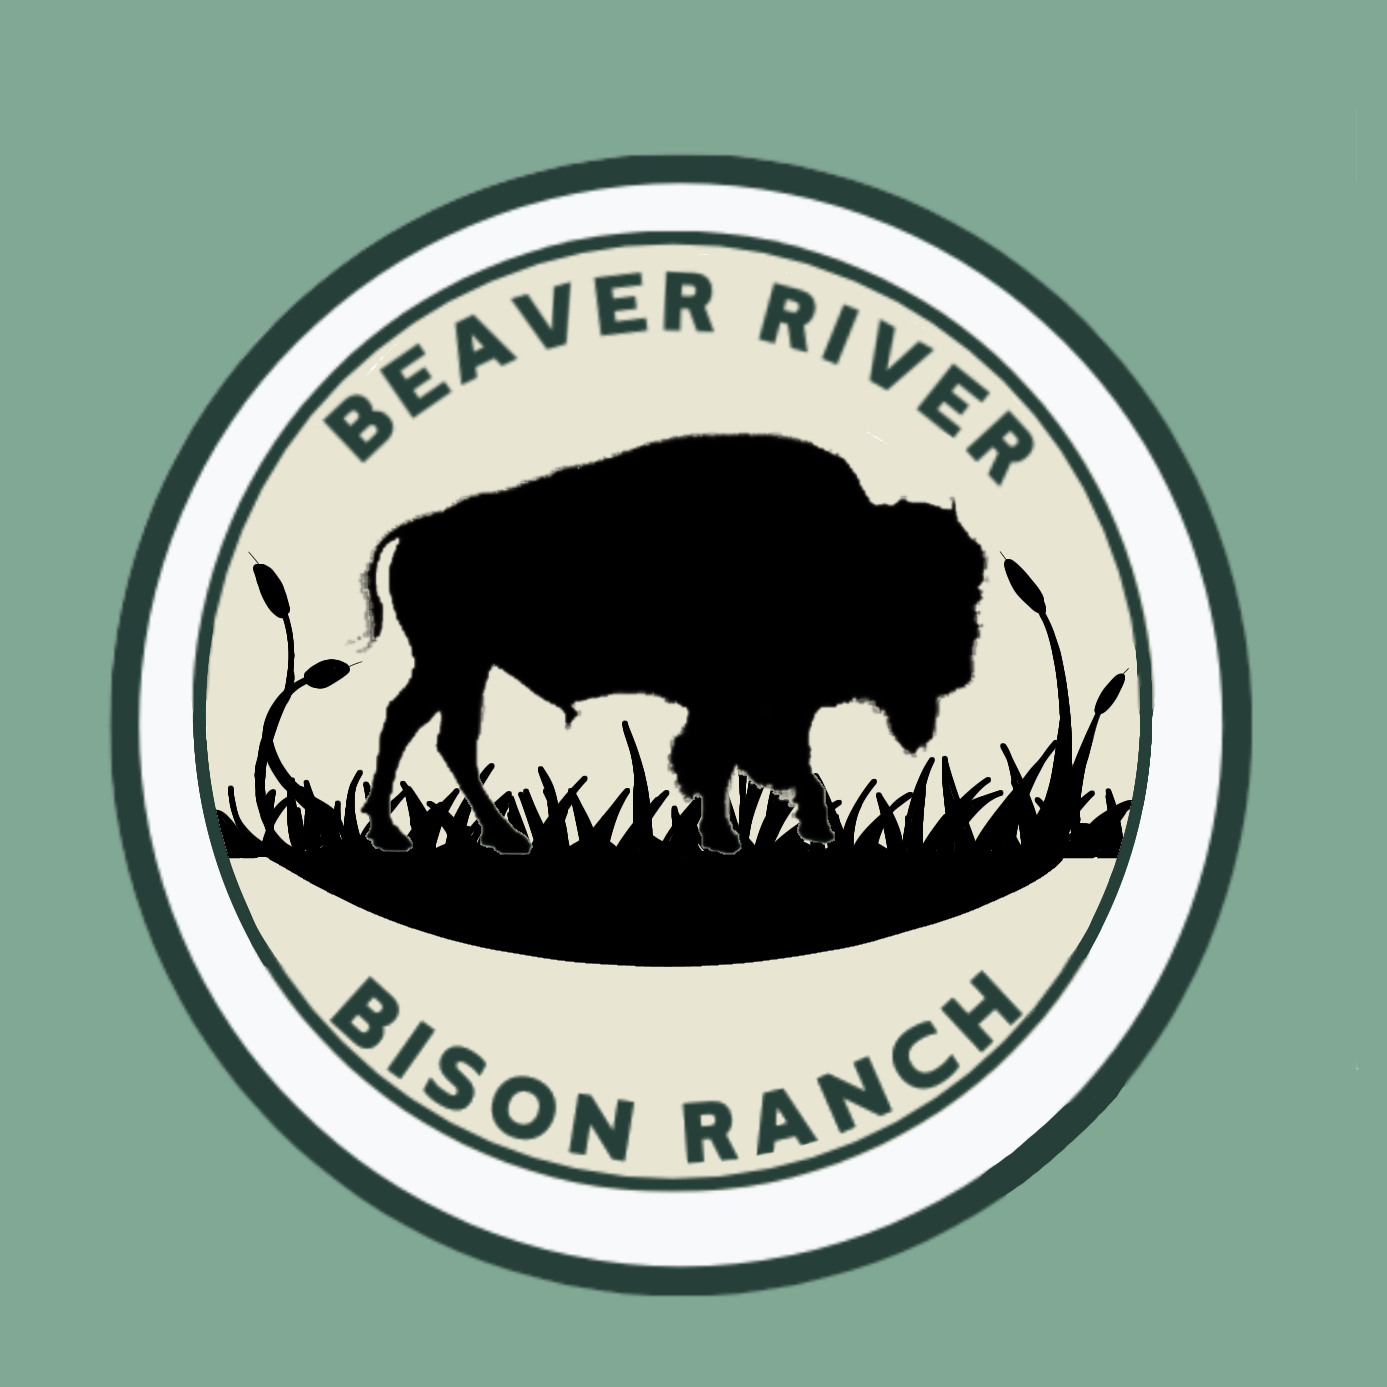 Beaver River Bison Ranch